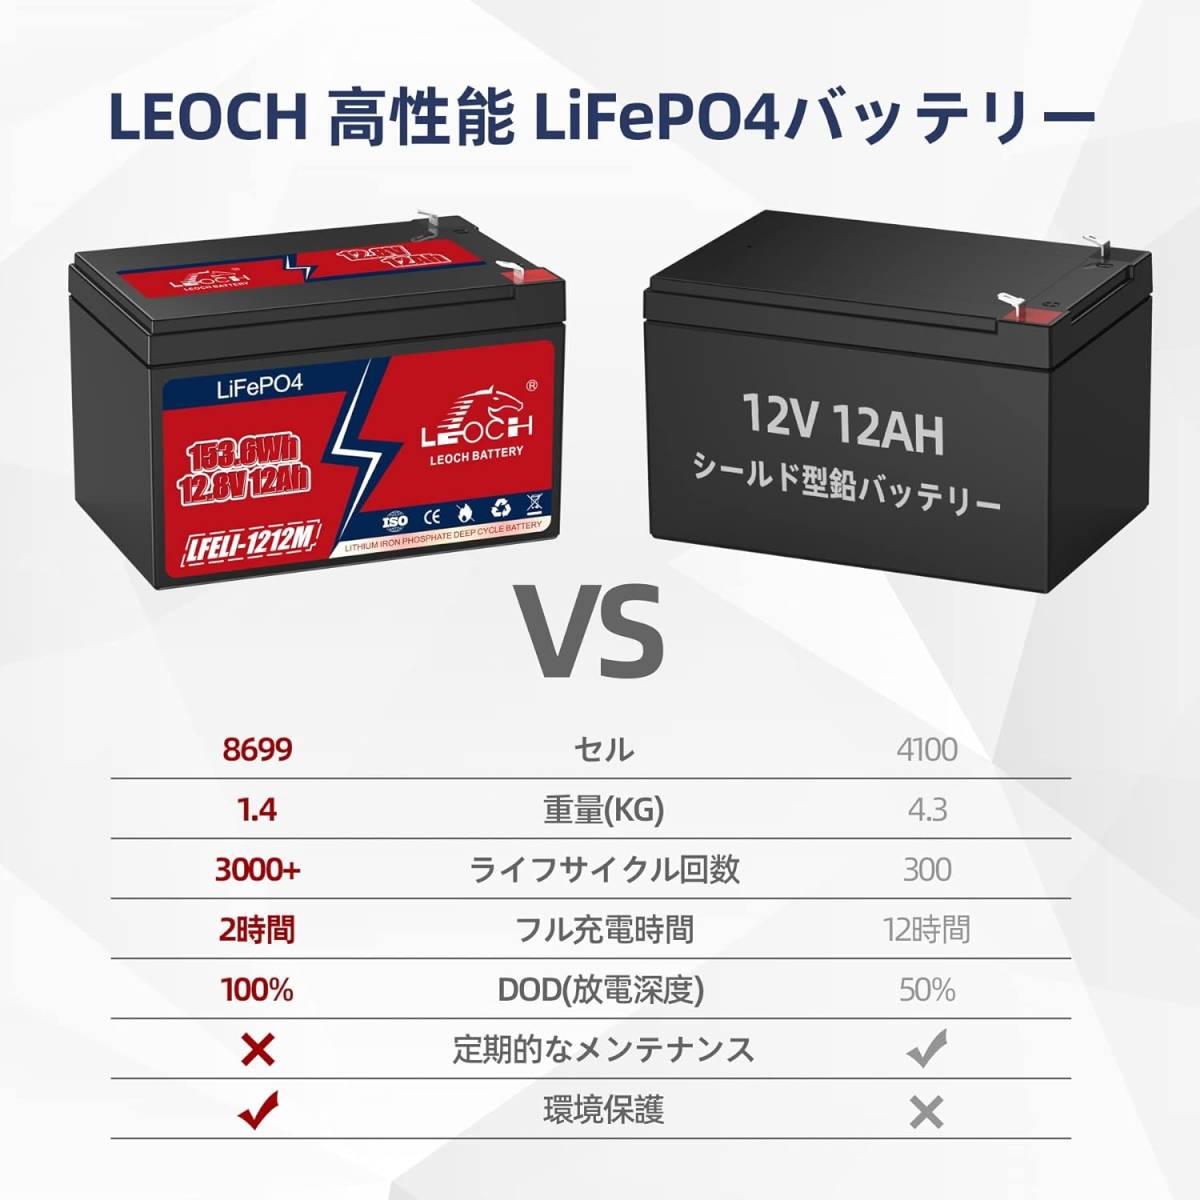 12V-12AH LEOCH 12V 12Ah ... литий  ион  батарея   LFELI-1212M LiFePO4 батарея  BM